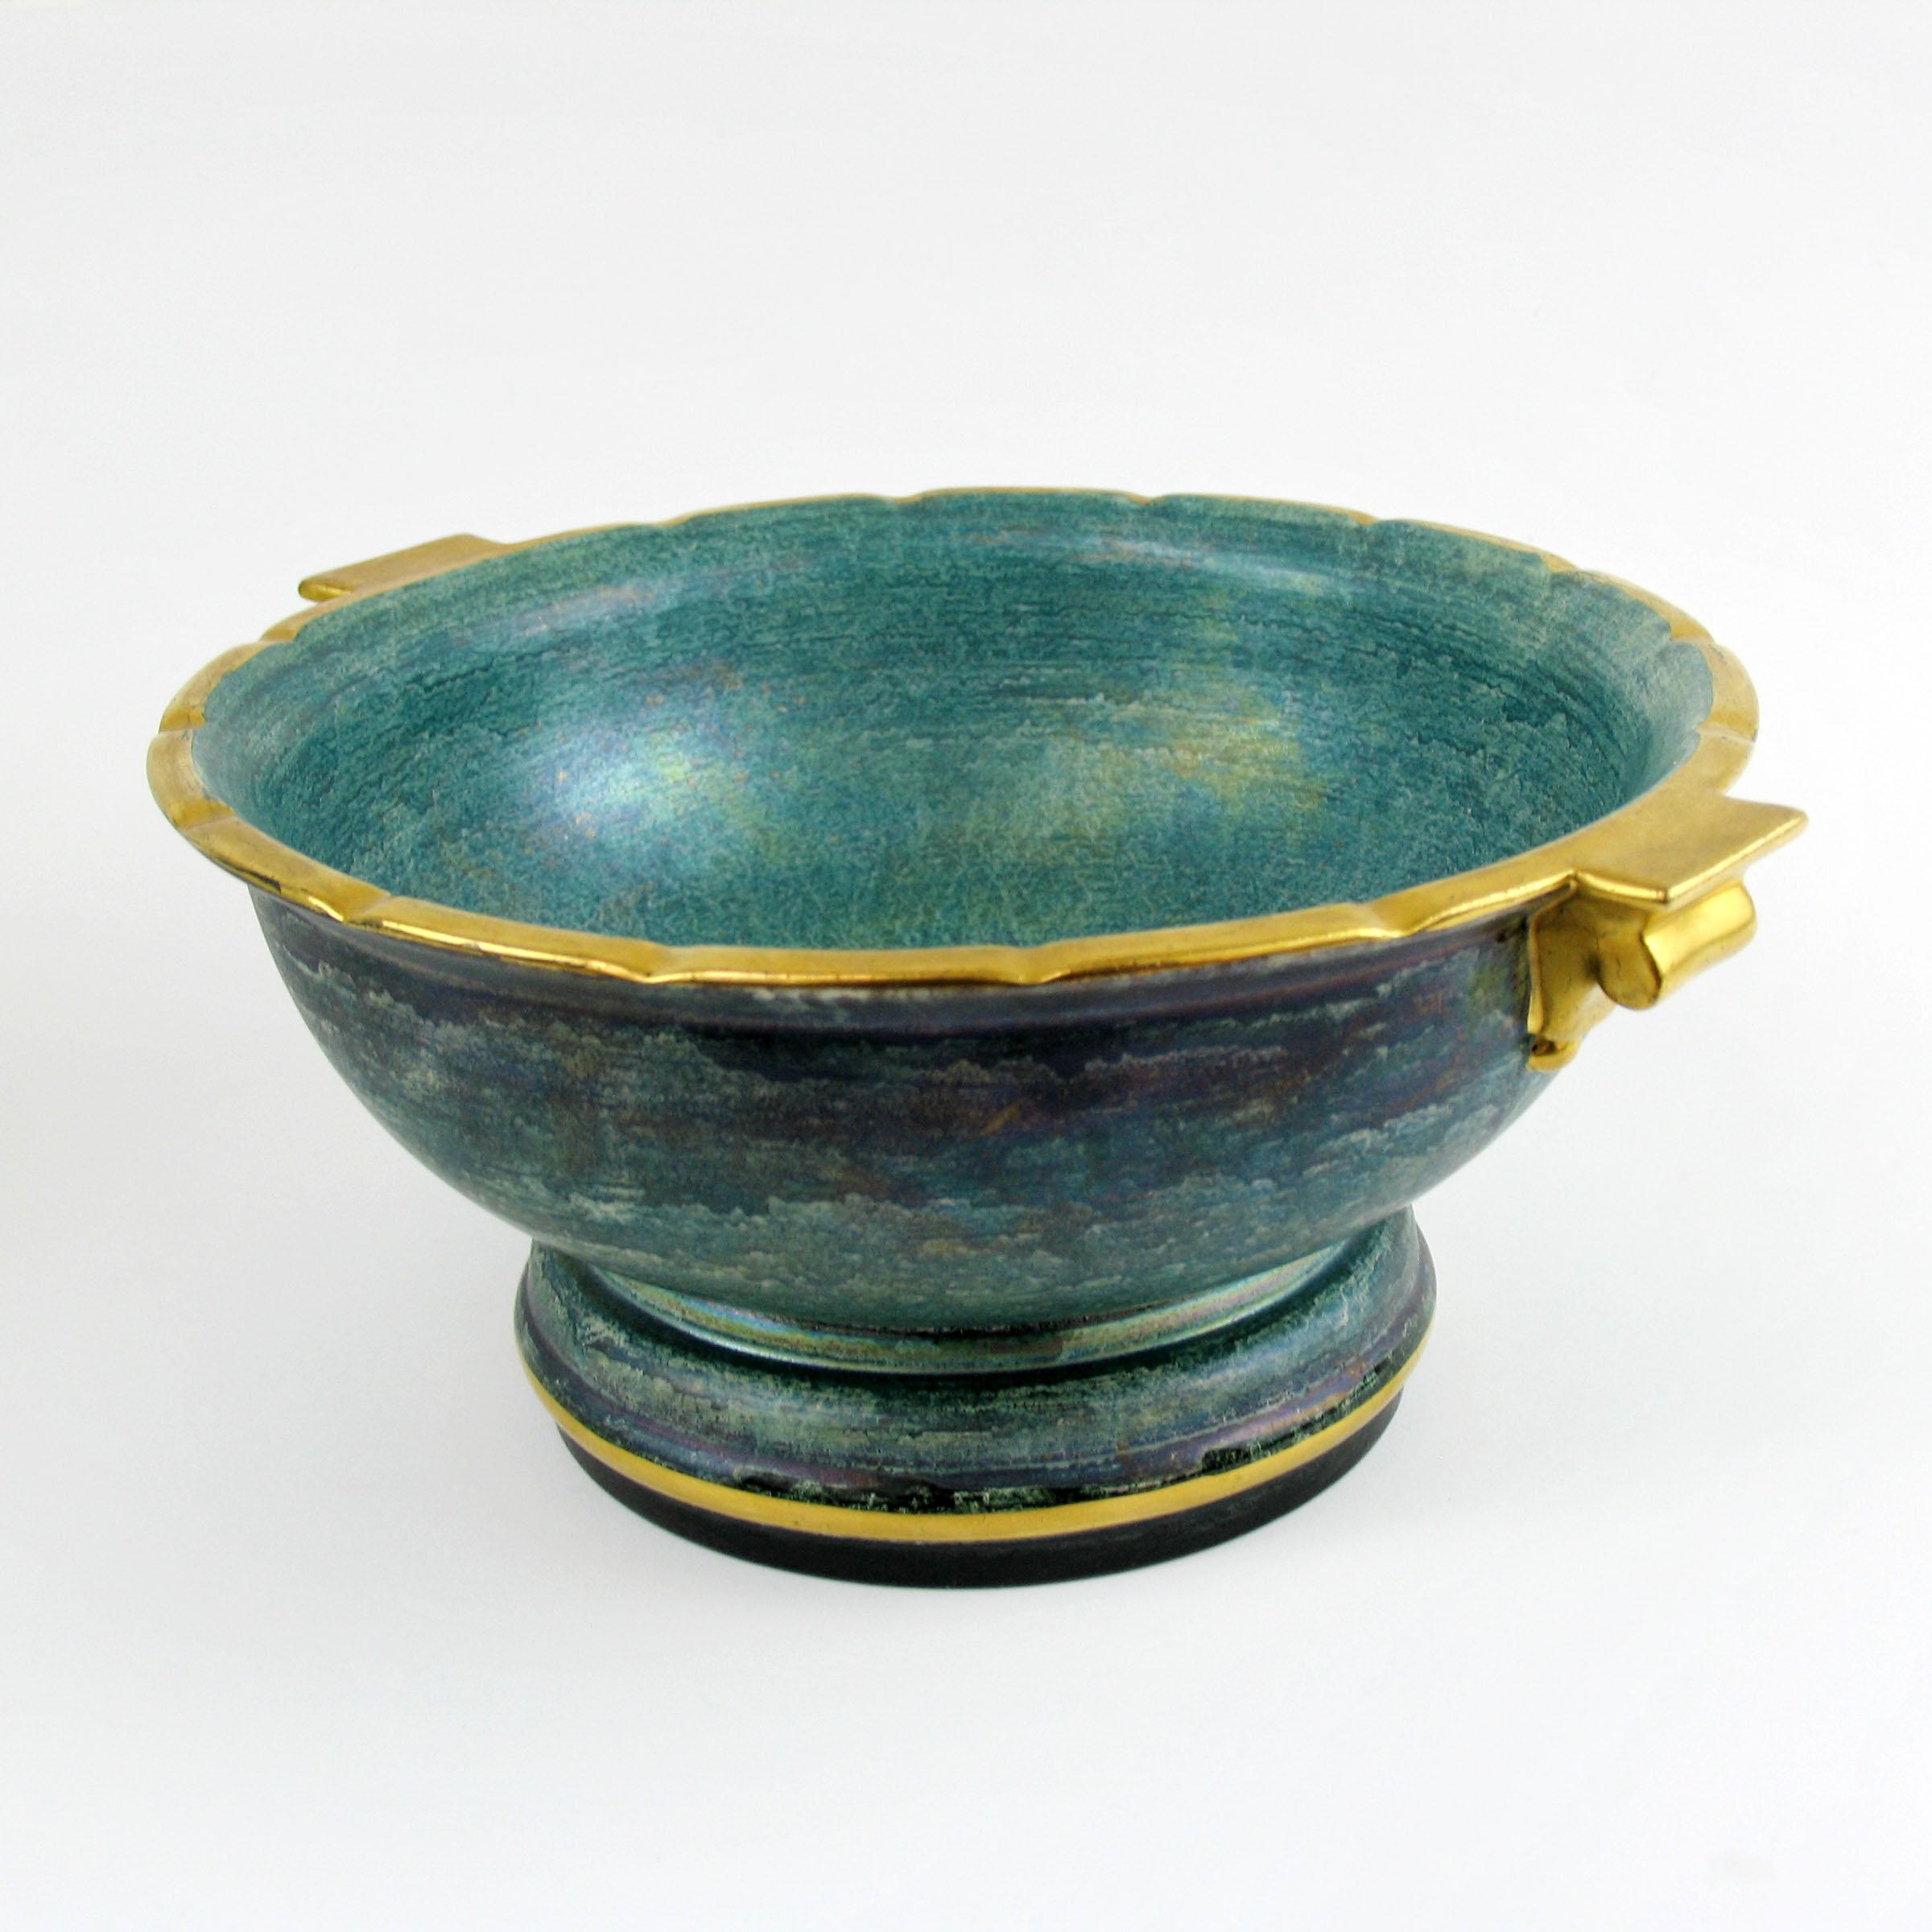 Josef Ekberg Green and Gold Ceramic Footed Bowl, Gustavsberg, Sweden 1930s For Sale 3